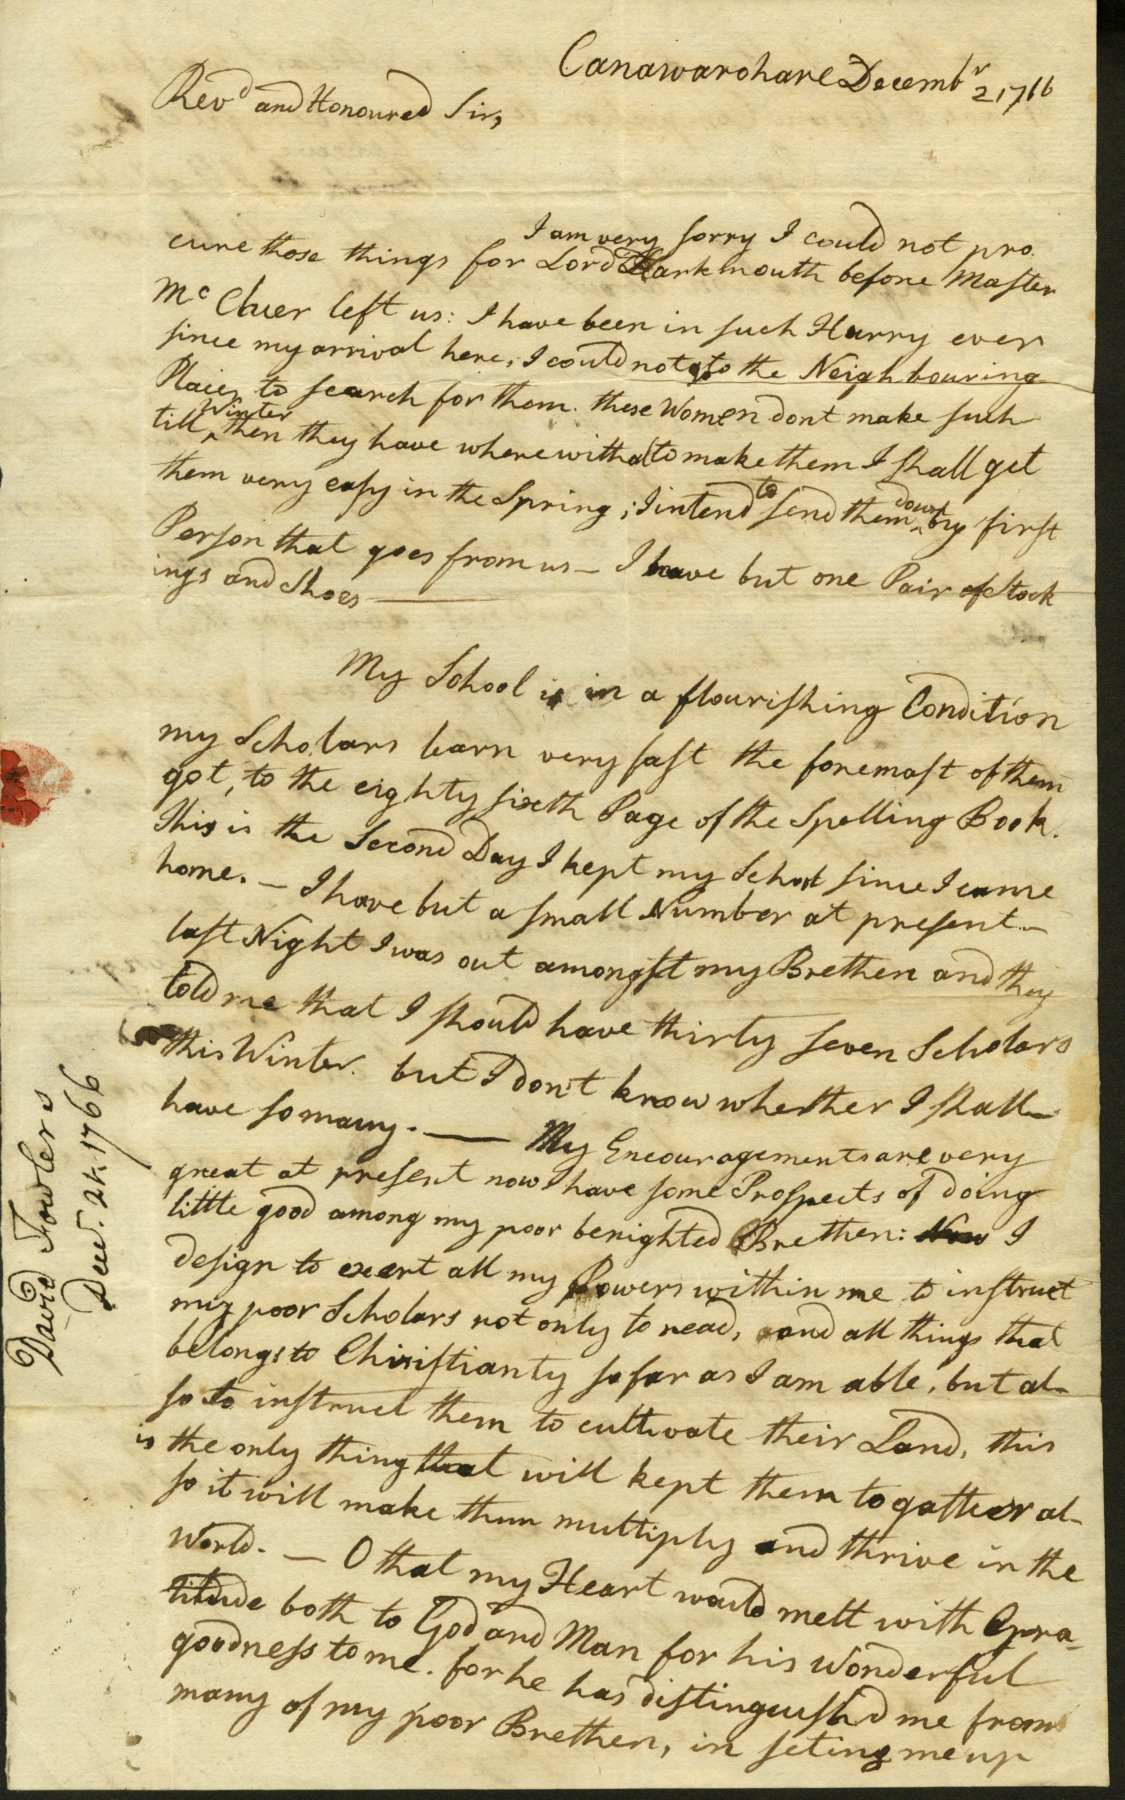 David Fowler to Eleazar Wheelock. 1766 Dec 2. Canawohare.